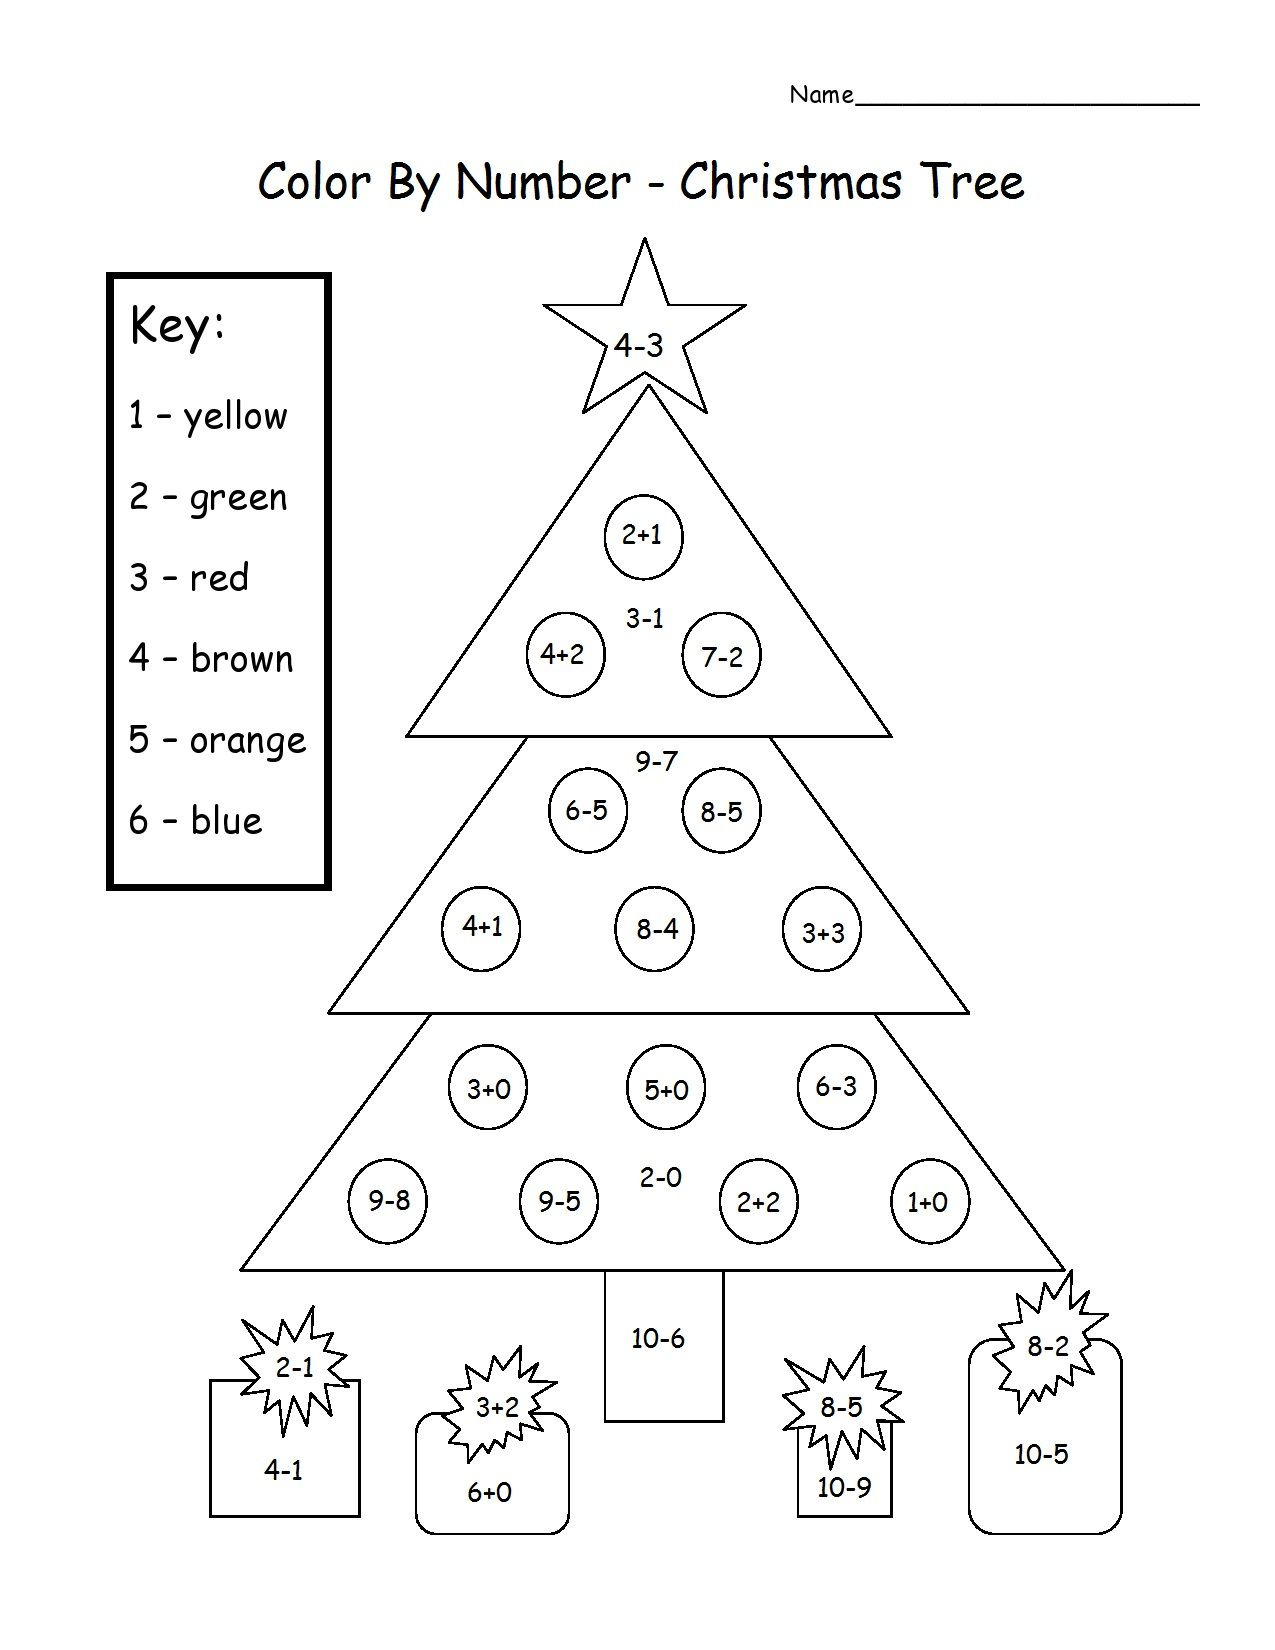 Christmas Mosaic Math Worksheets Printable Multiplication Flash Cards